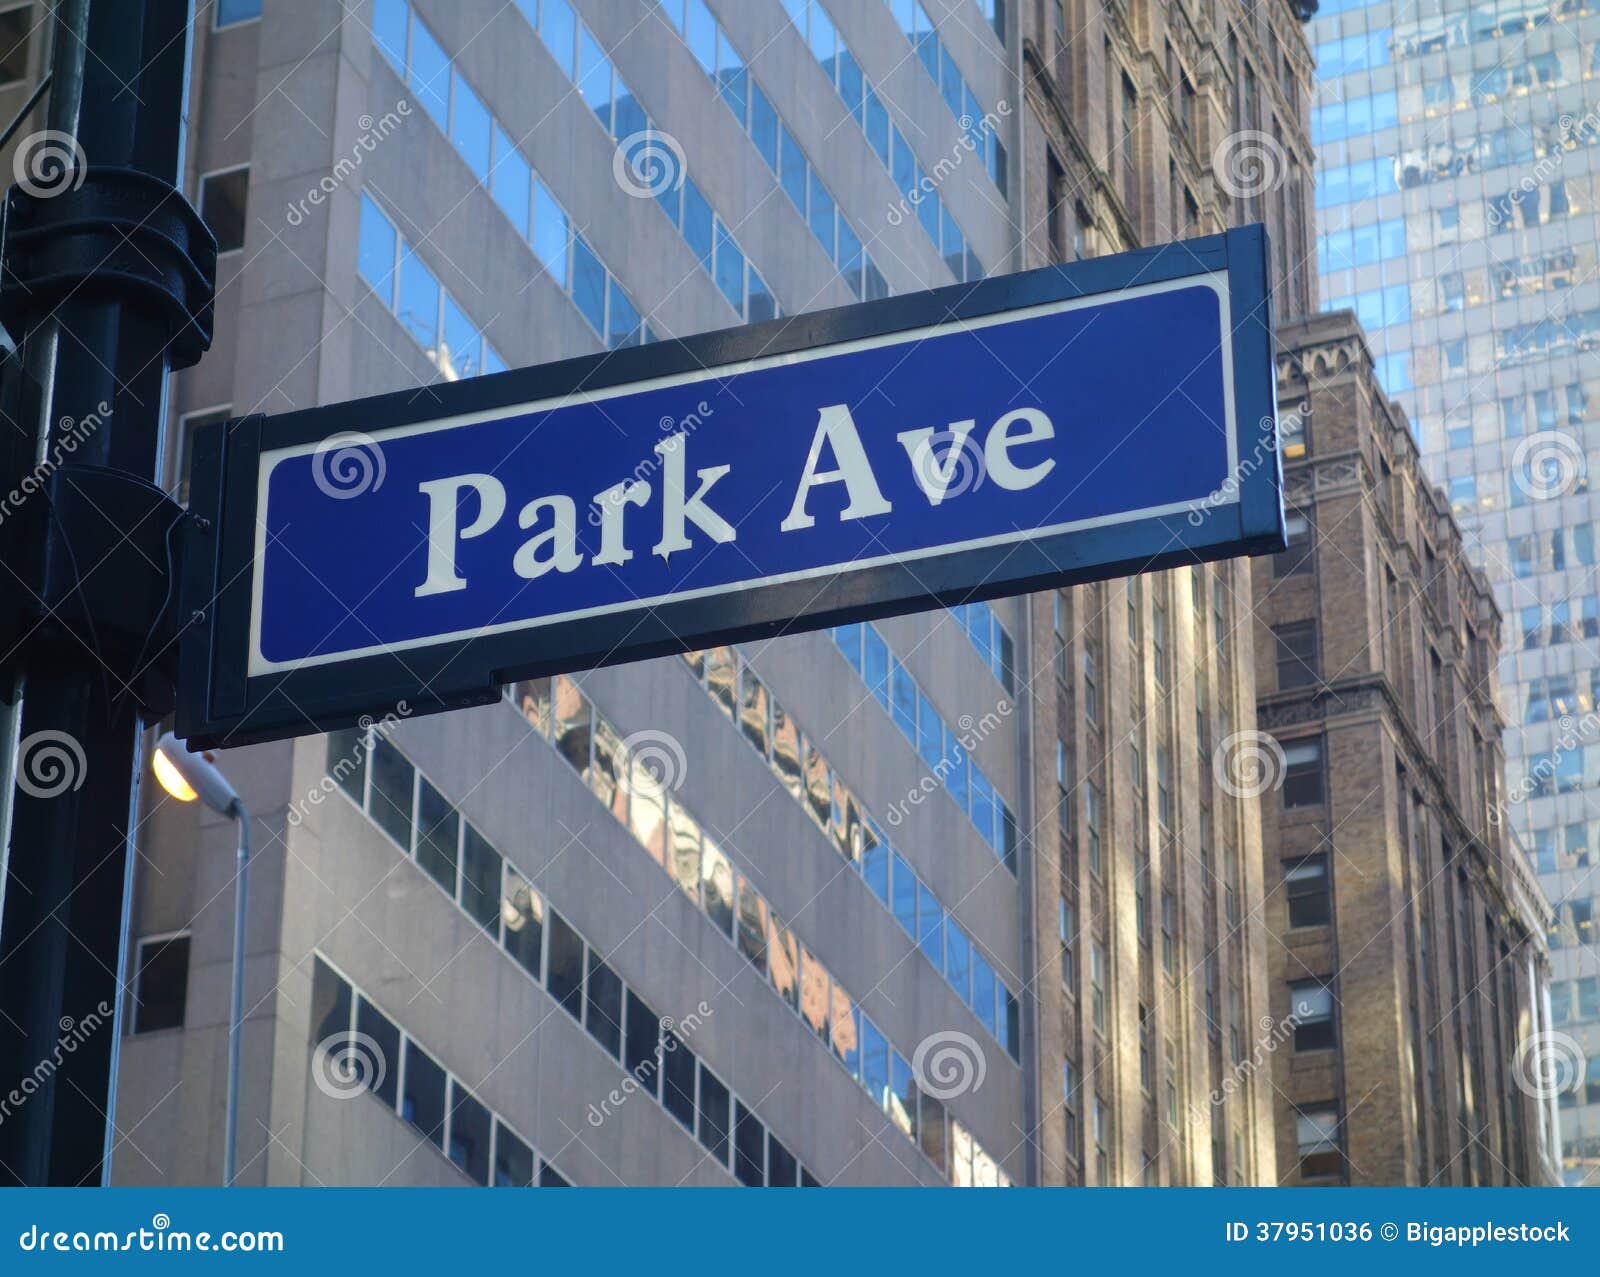 park avenue in new york city